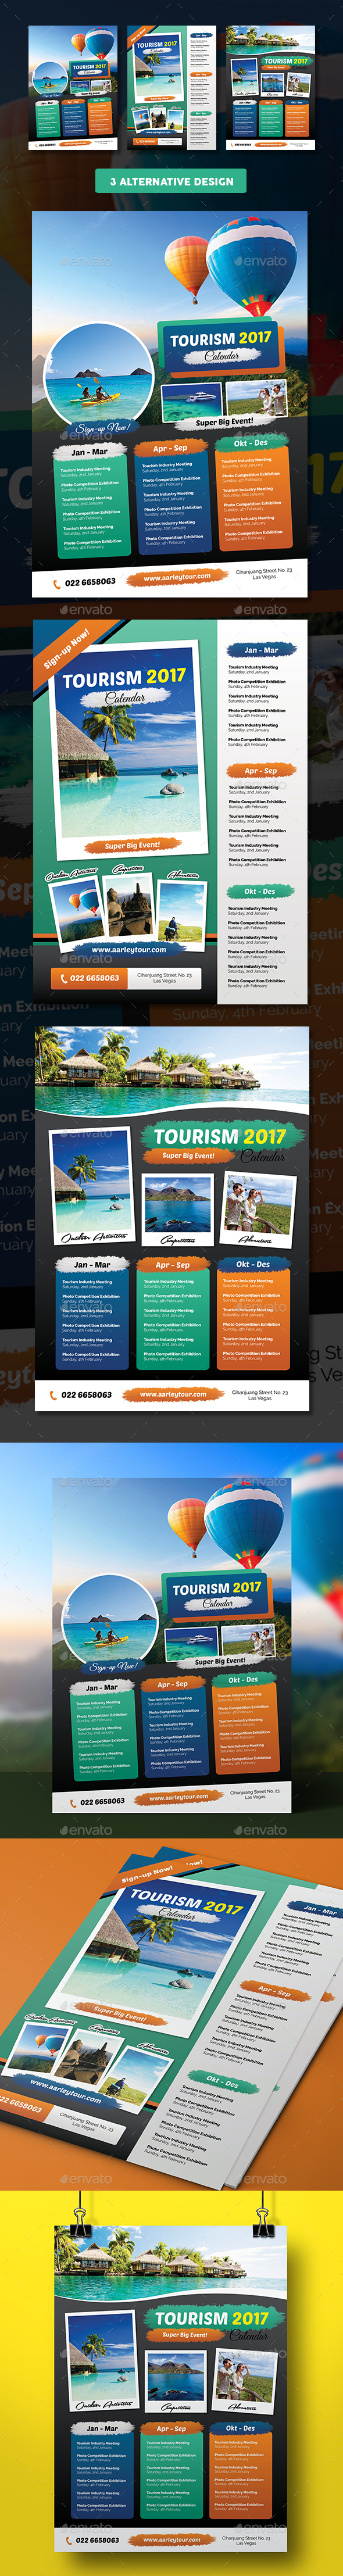  Tourism Events Calendar Flyer Template 